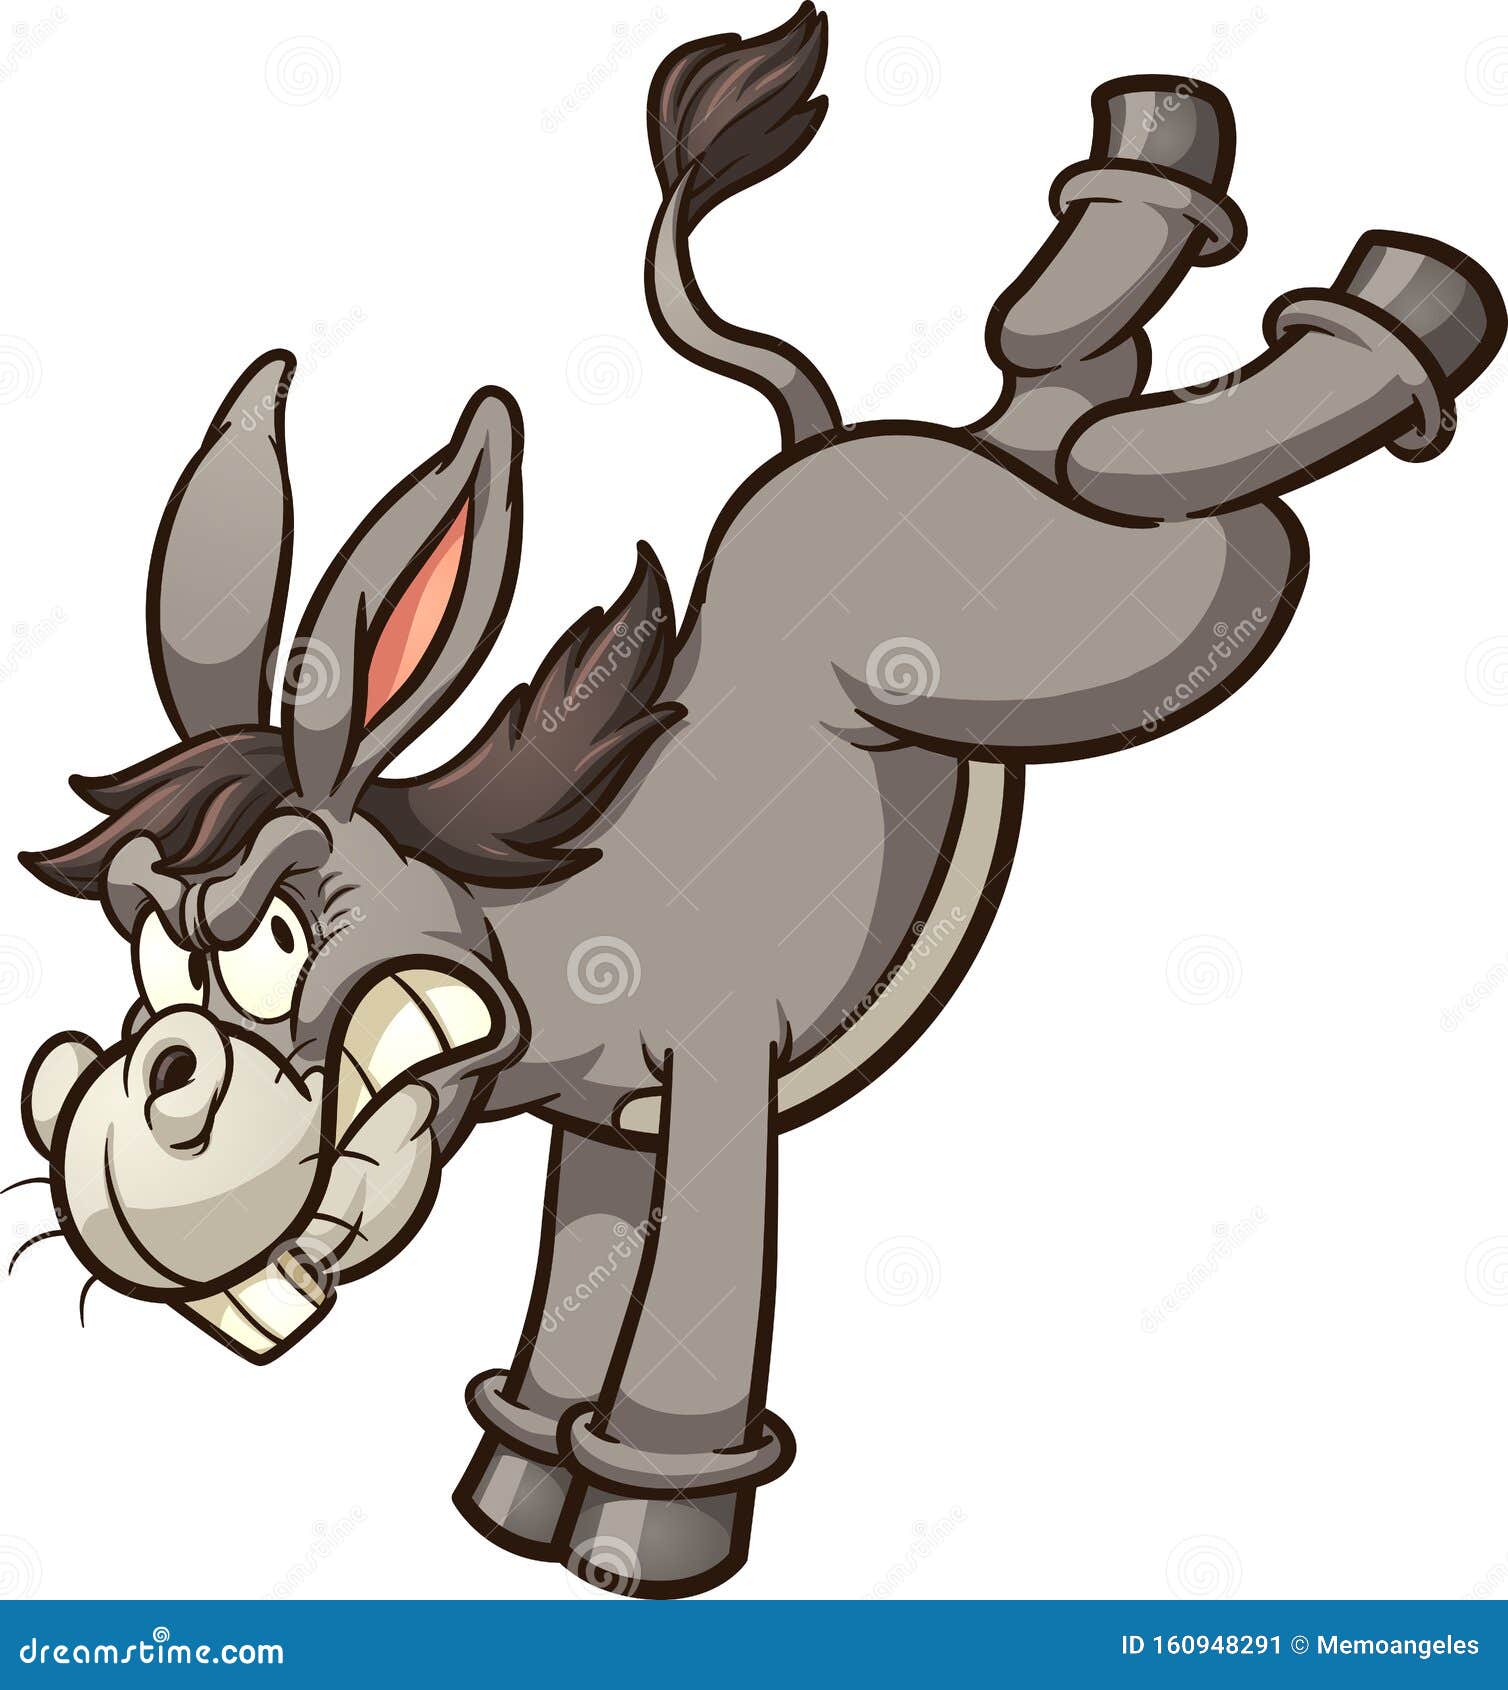 angry cartoon donkey throwing a back kick